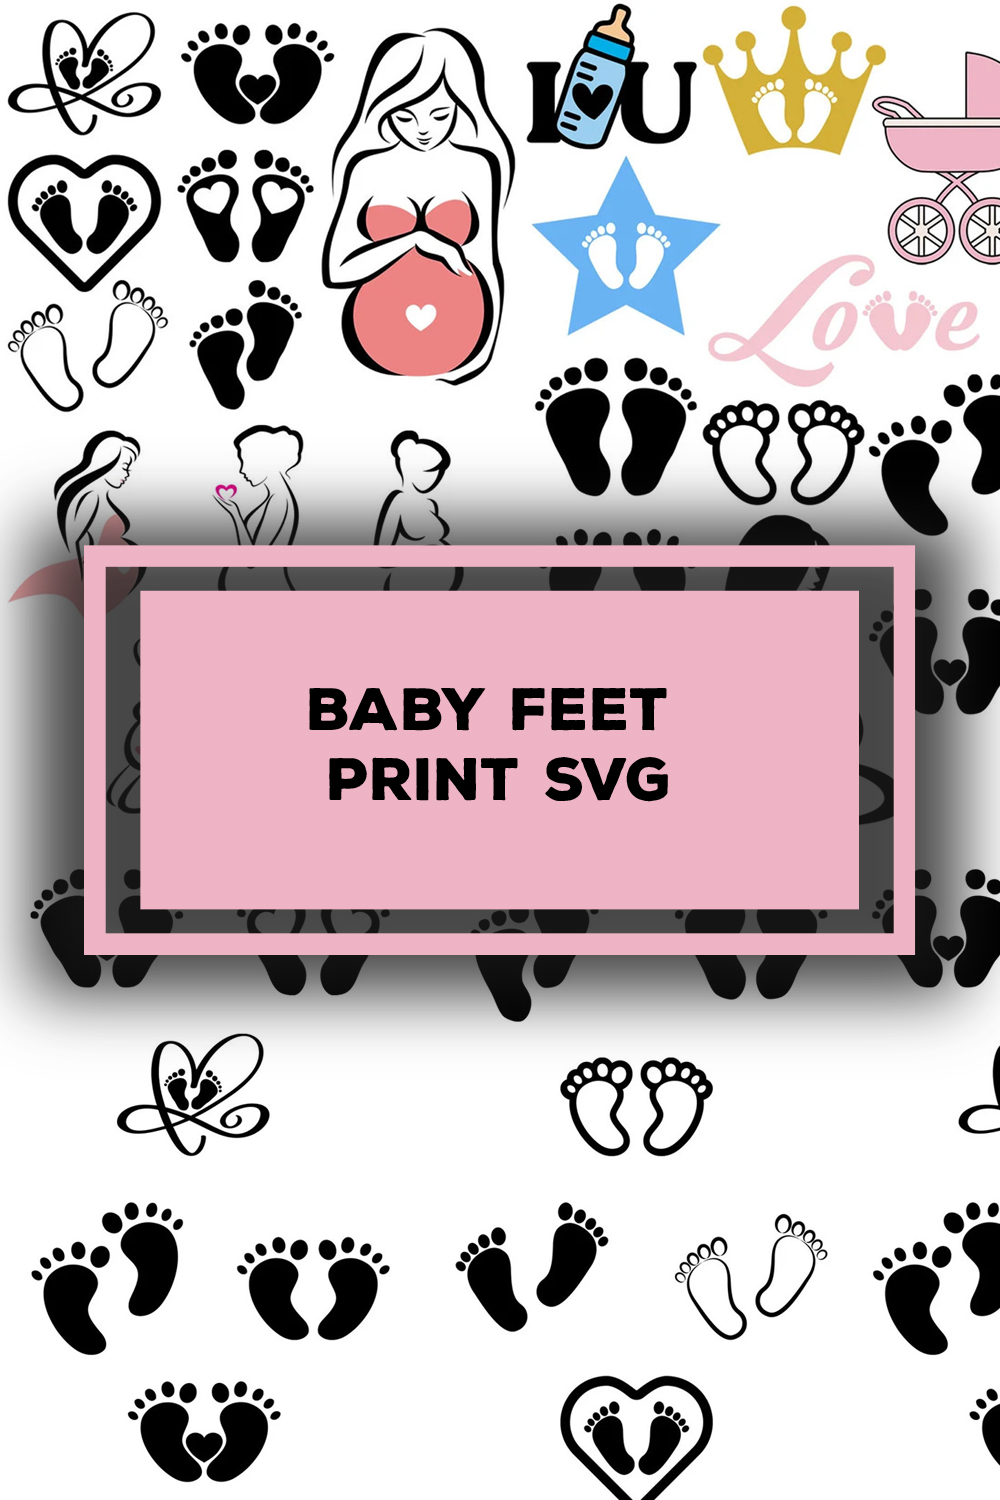 Baby feet print svg of pinterest.